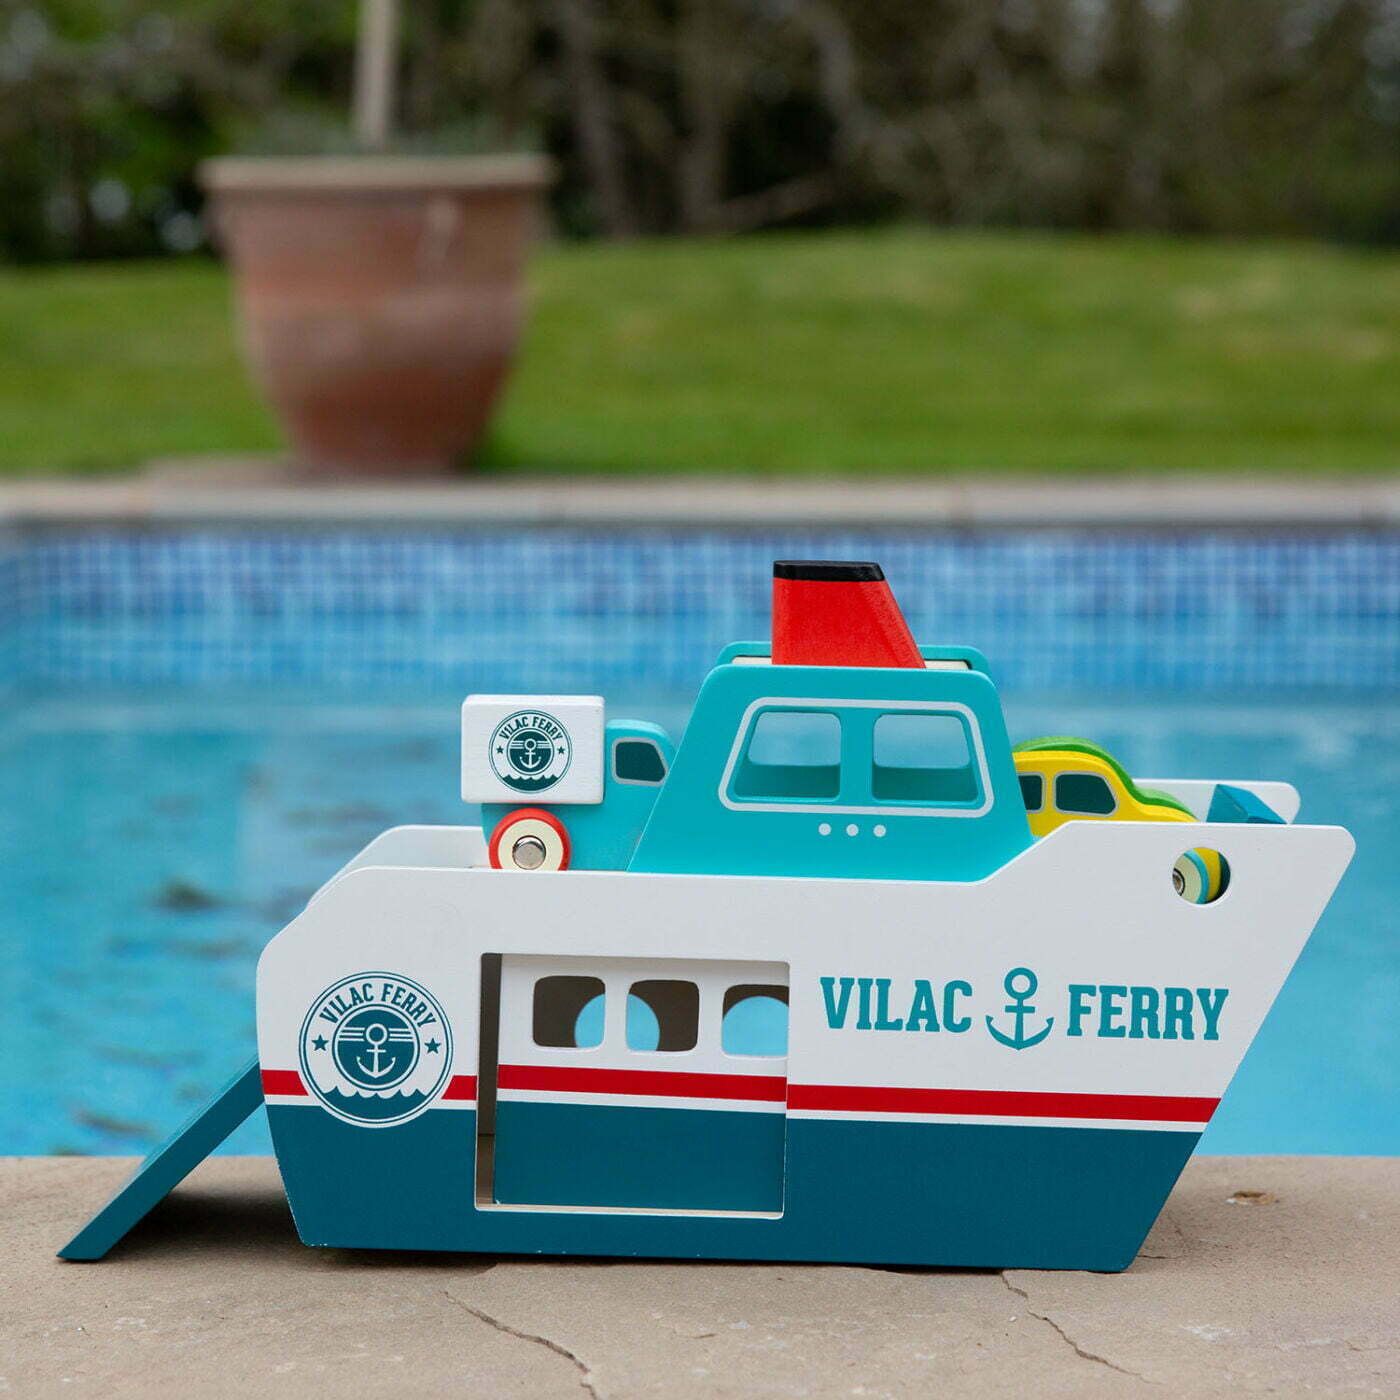 Vilac Vilacity Ferry Boat